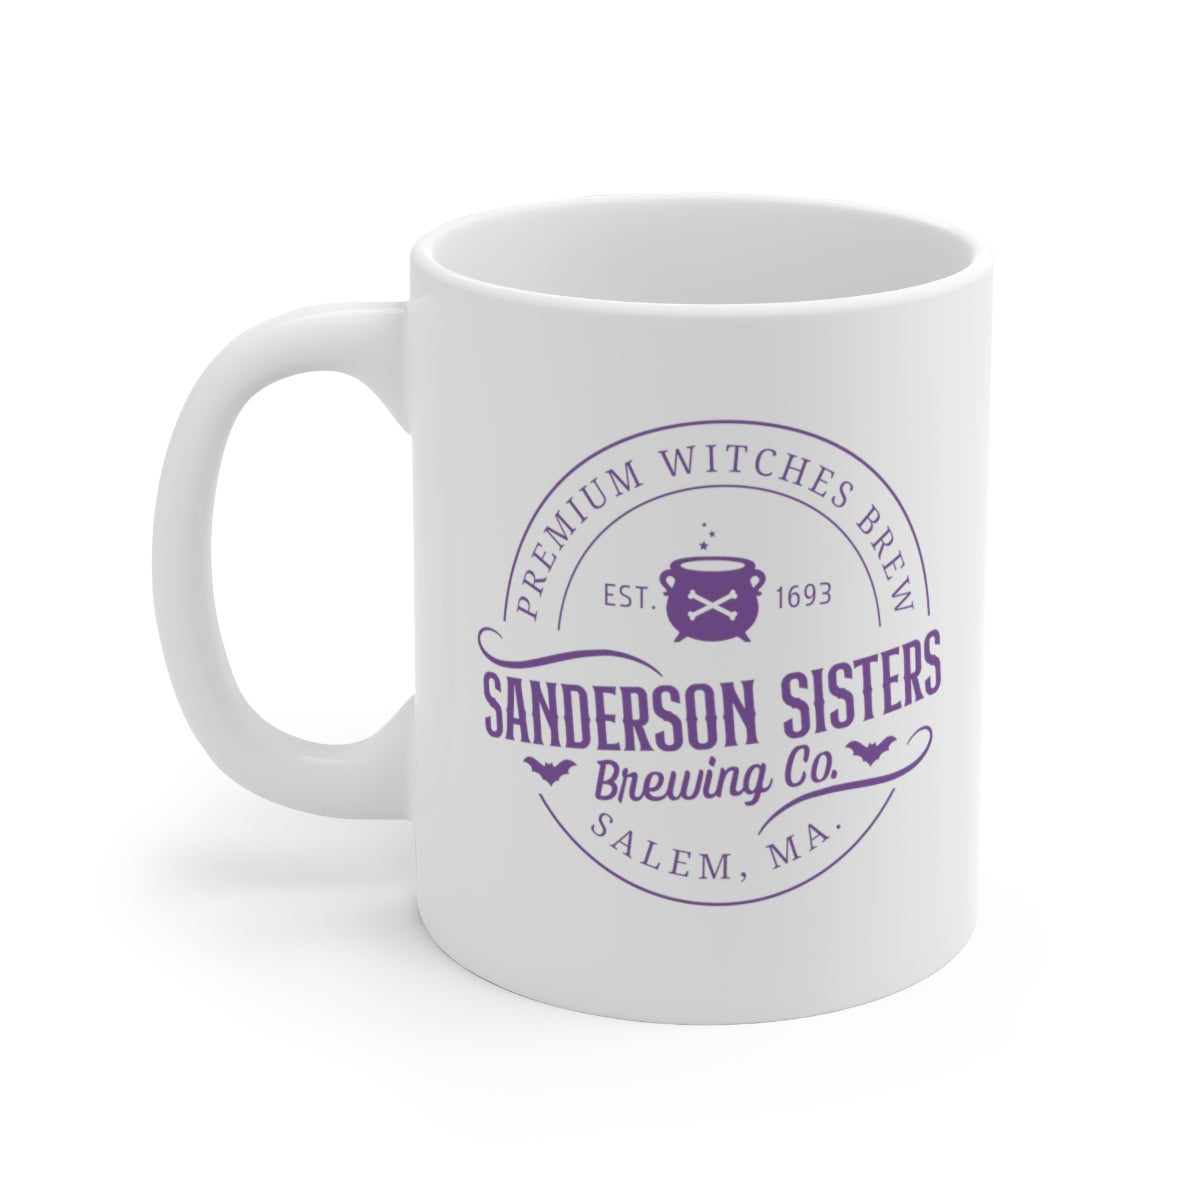 Sanderson Sisters Brewing Co Mug